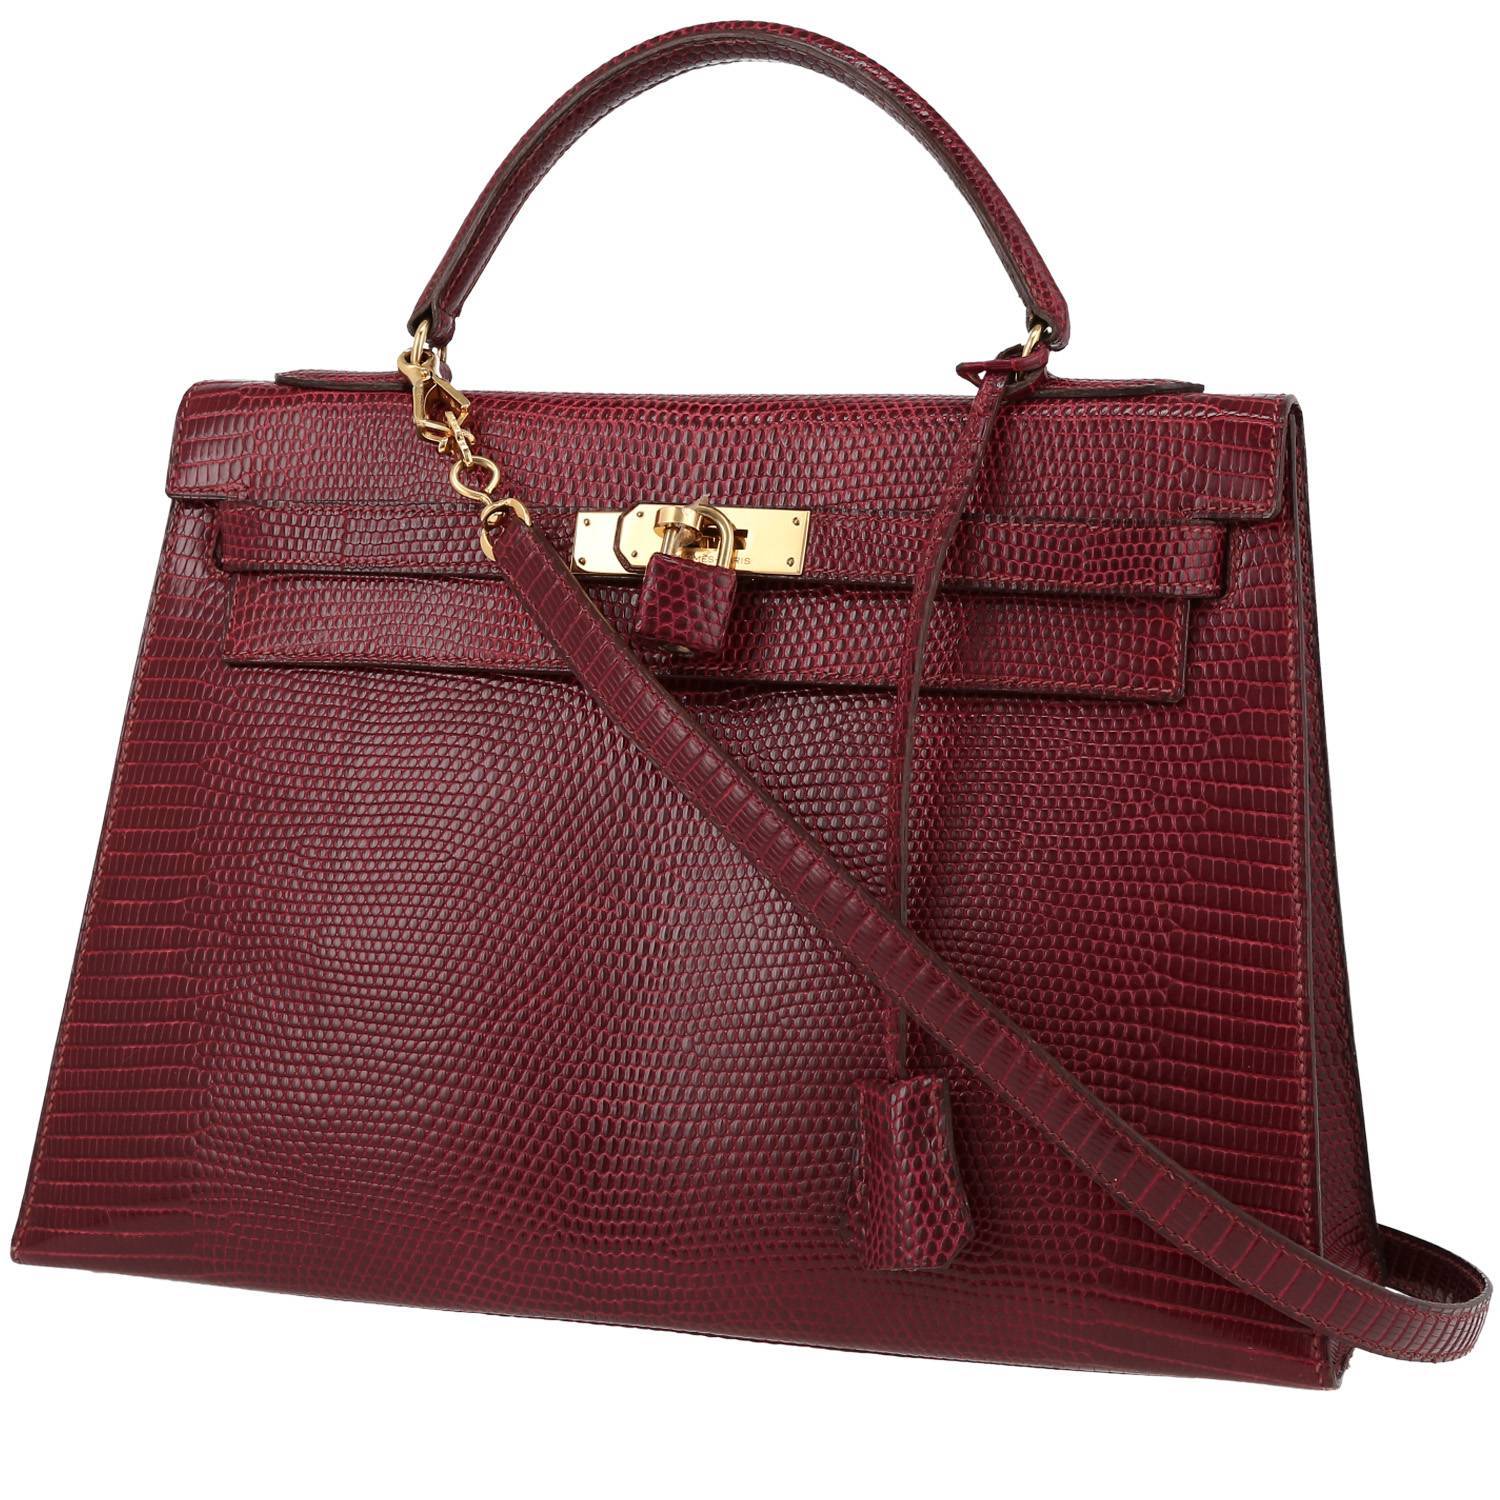 Hermès Kelly 32 cm Handbag in Red H Lizzard